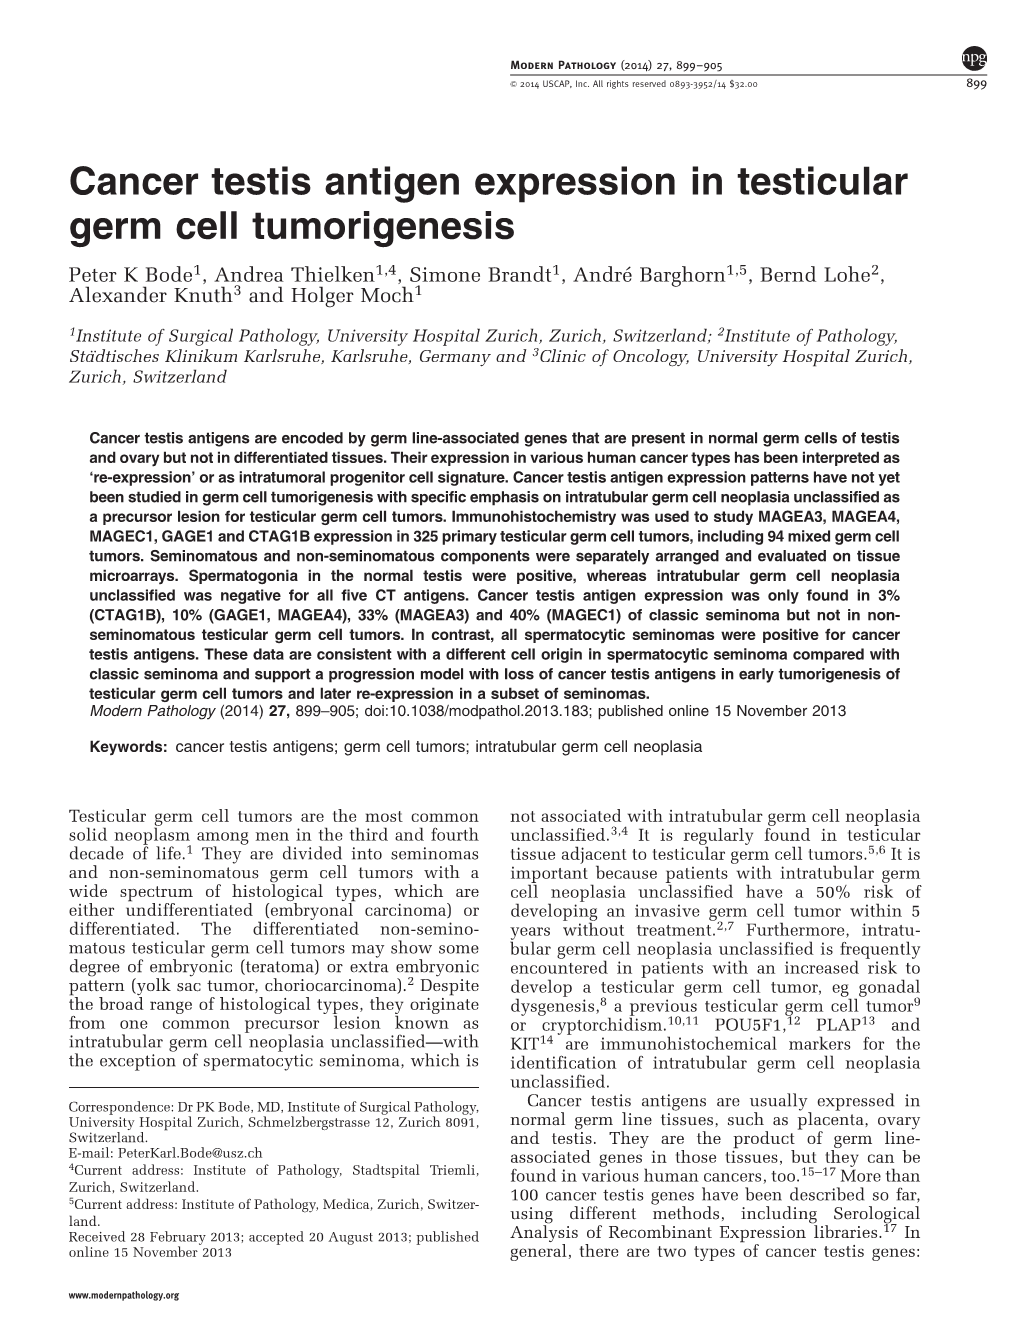 Cancer Testis Antigen Expression in Testicular Germ Cell Tumorigenesis